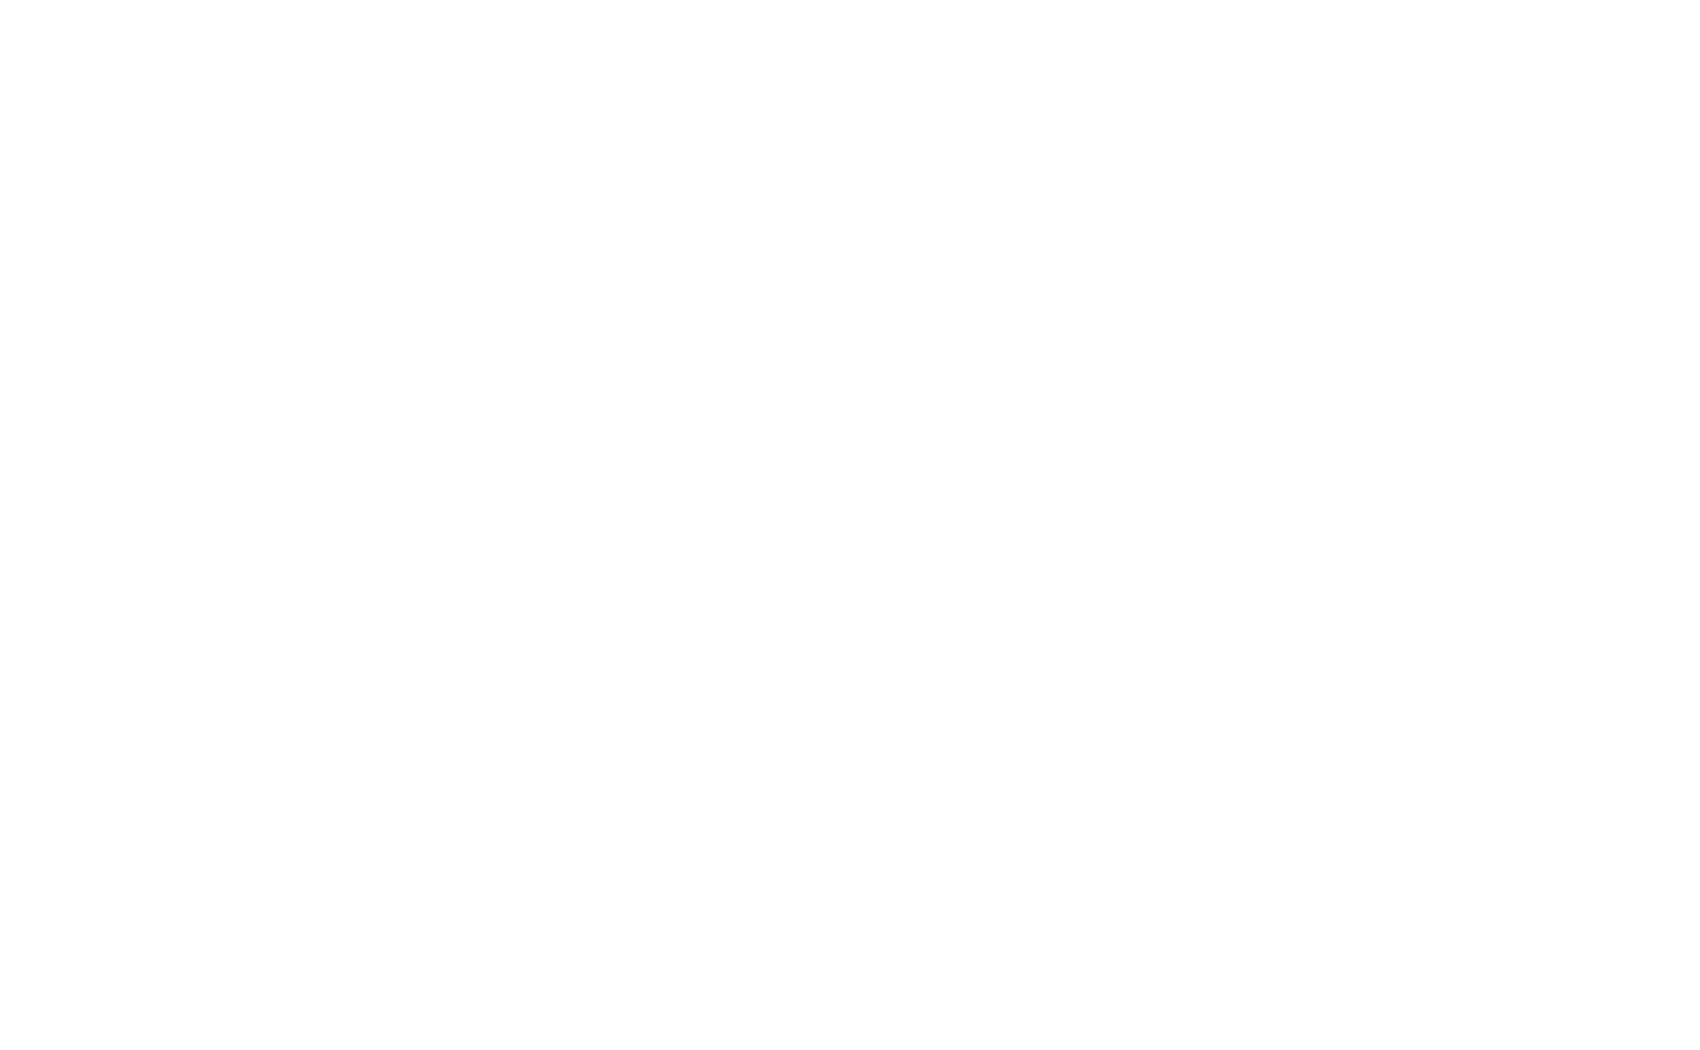 Breathe Yoga Logo